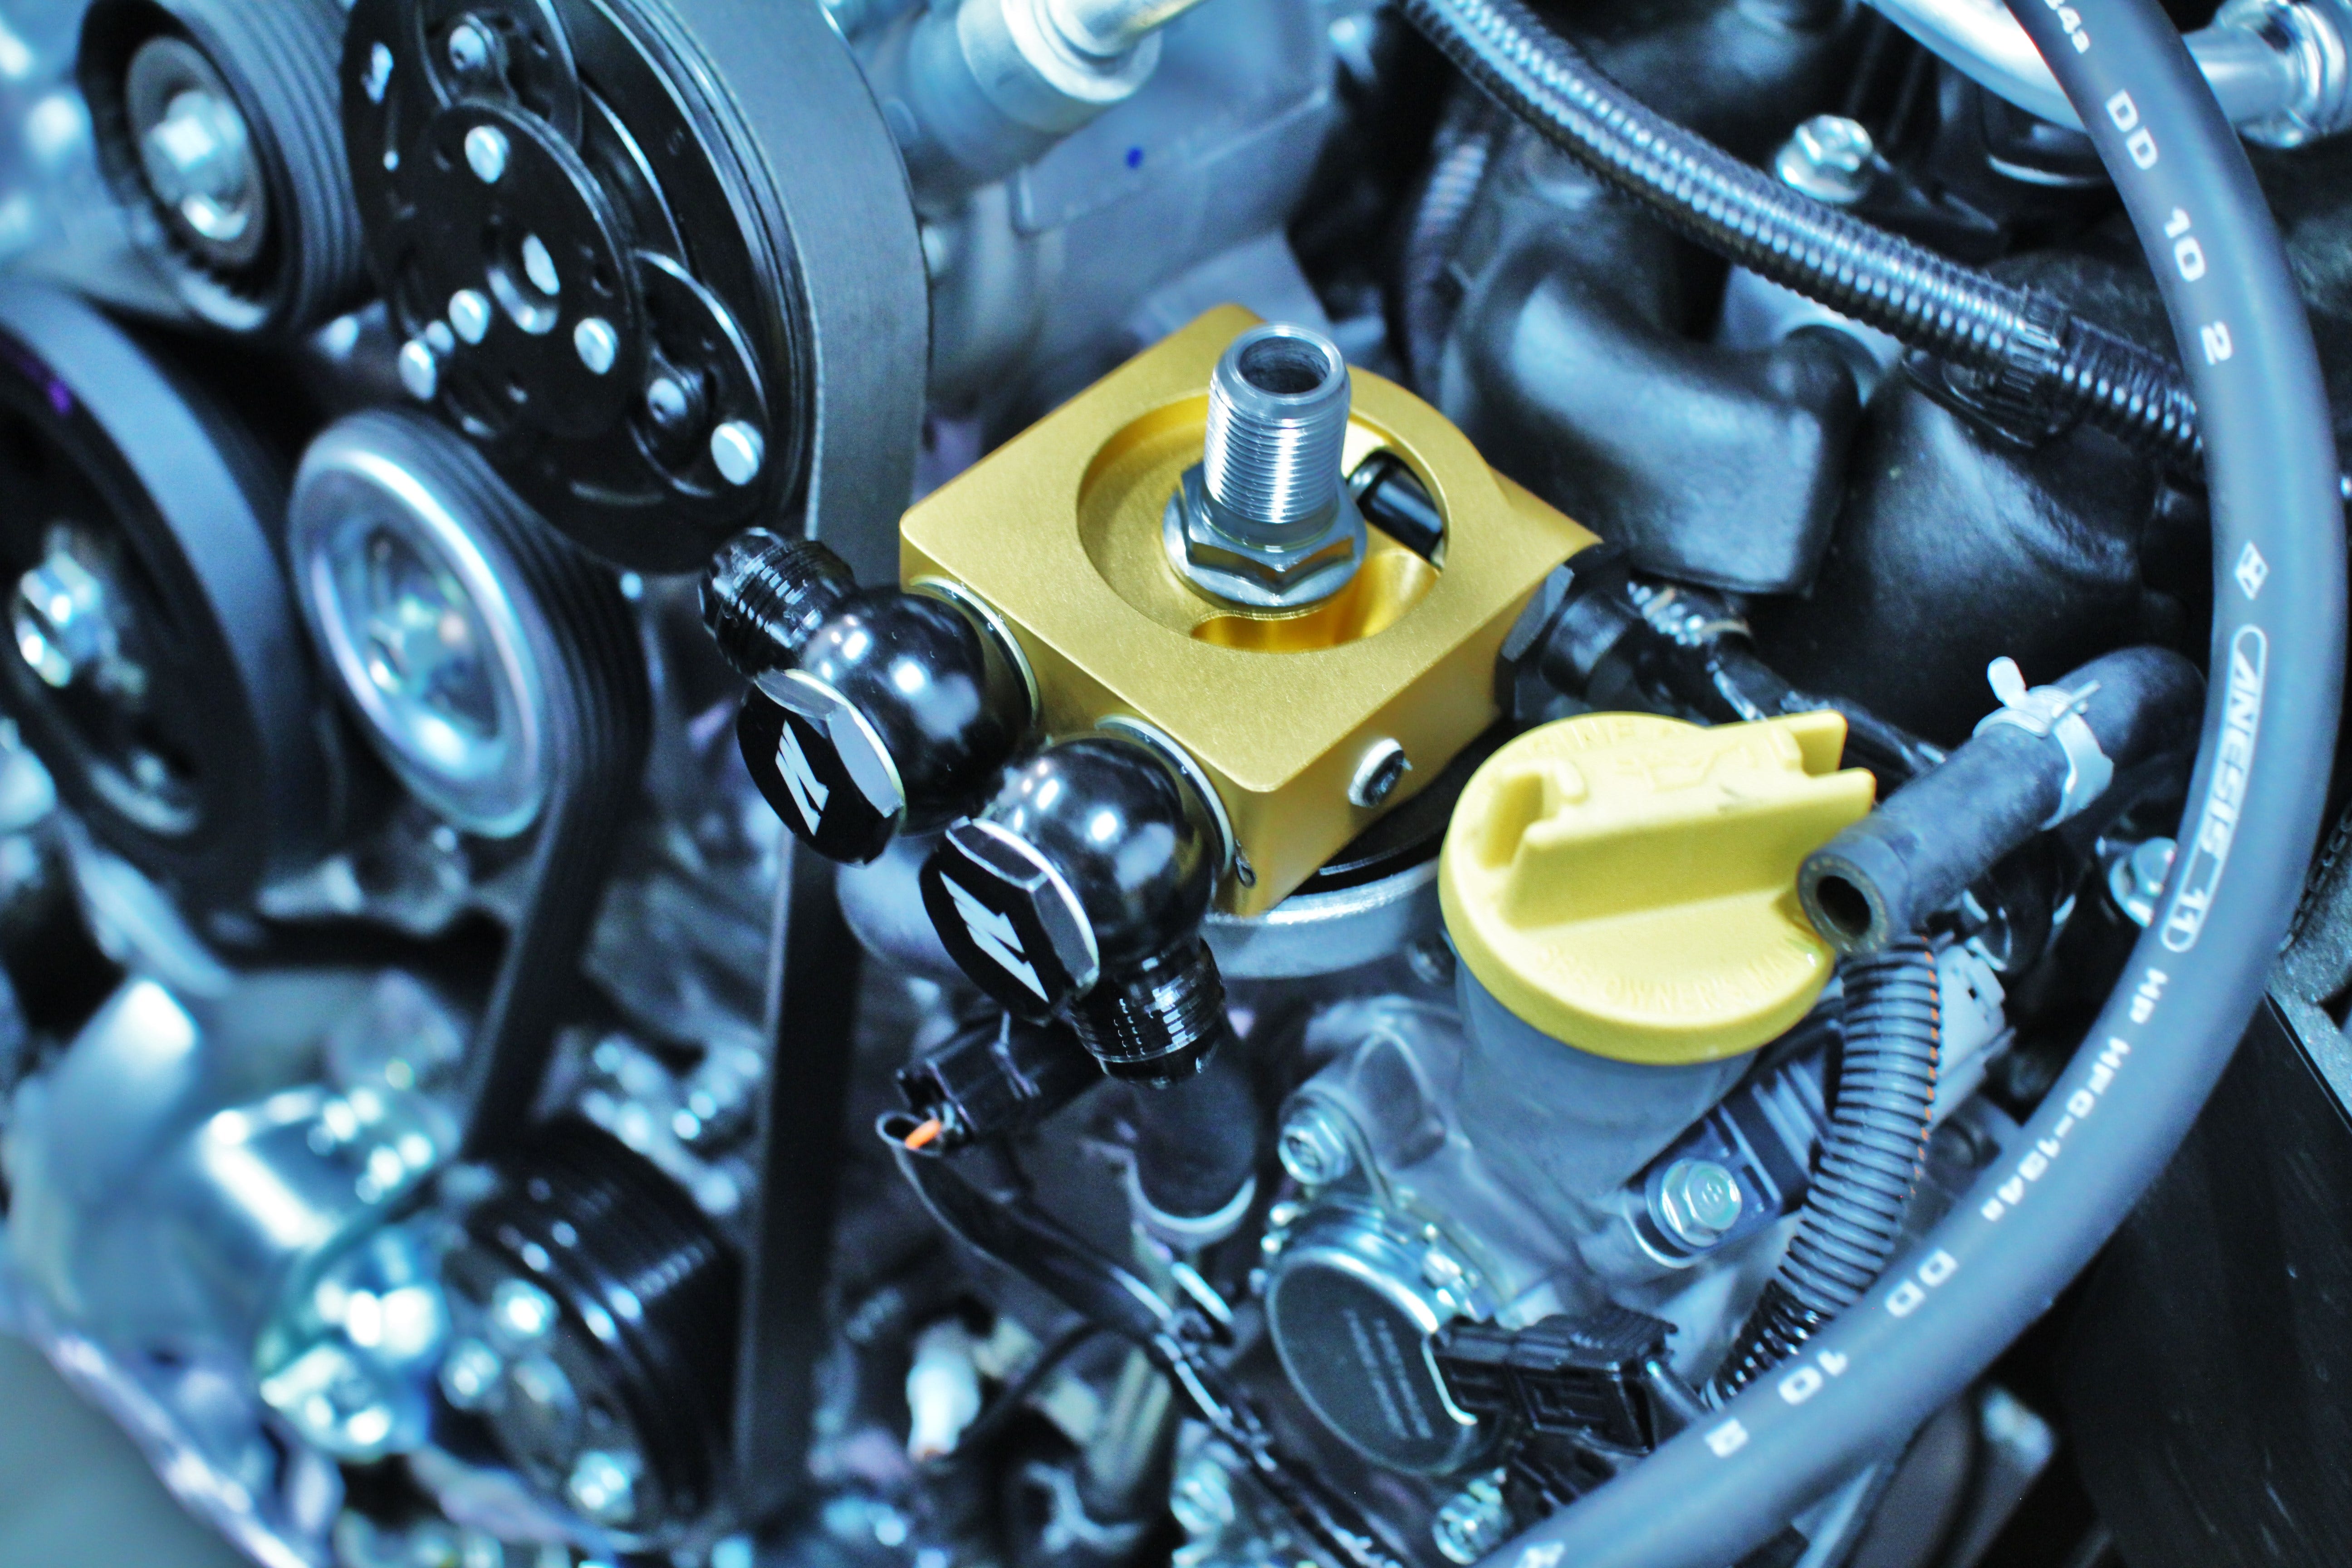 Mishimoto 2015 Subaru WRX Thermostatic Oil Cooler Kit, Part 2: Product Development